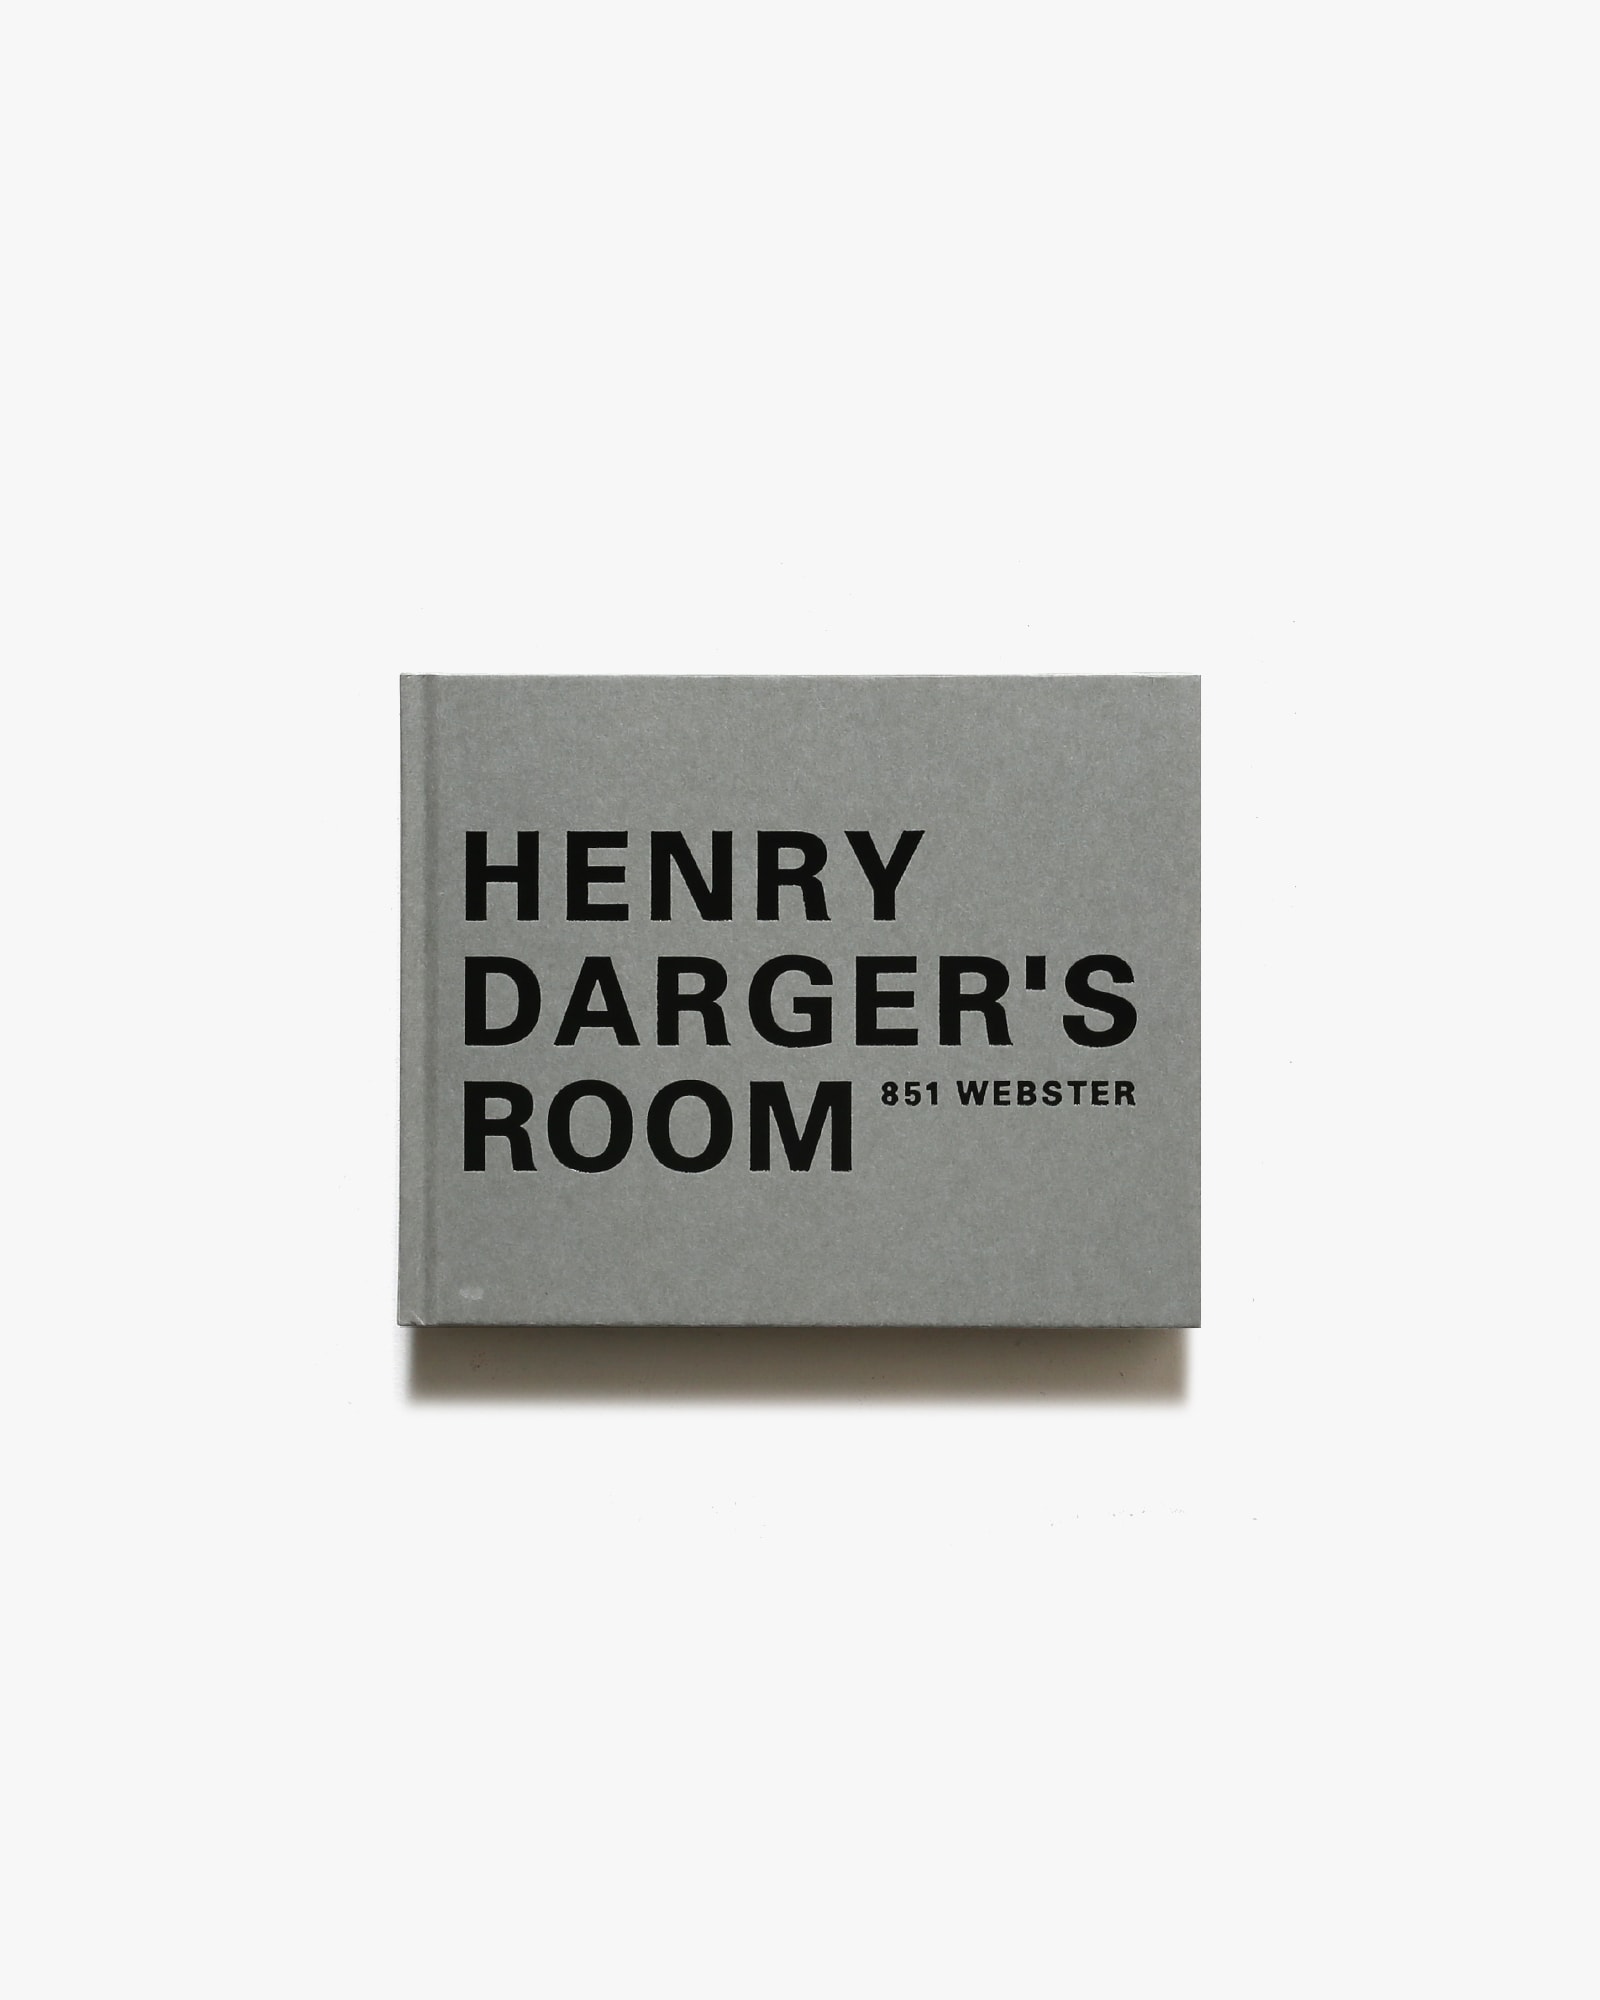 Henry Darger’s Room